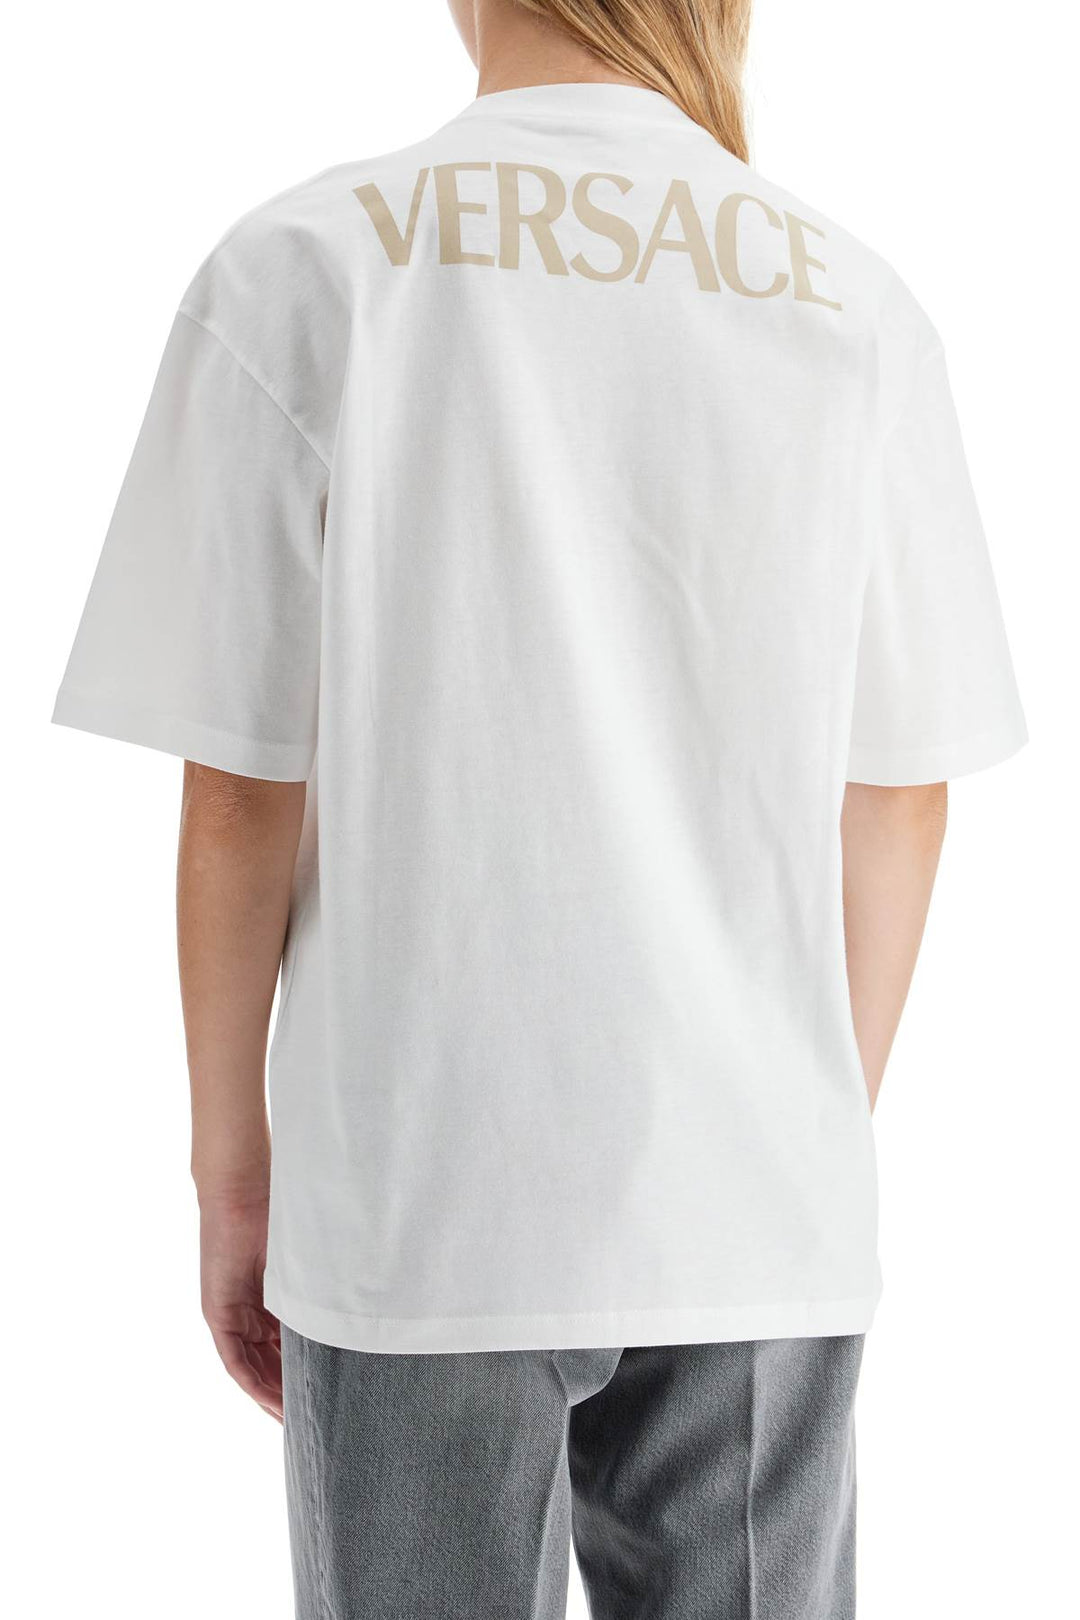 Versace Oversized T Shirt   The   White